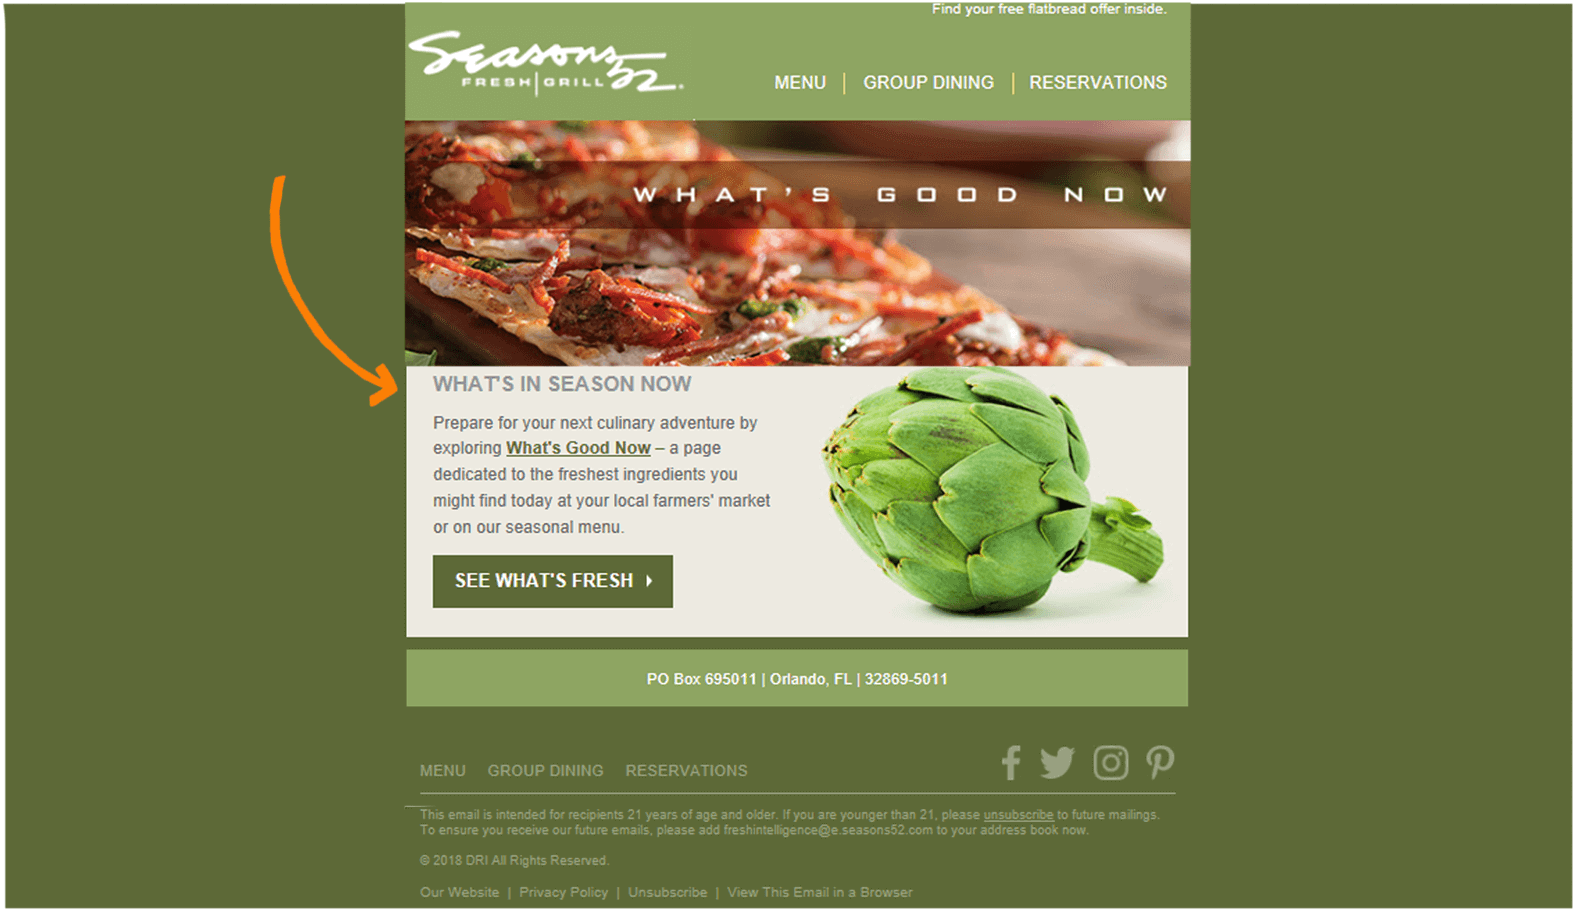 restaurant email marketing